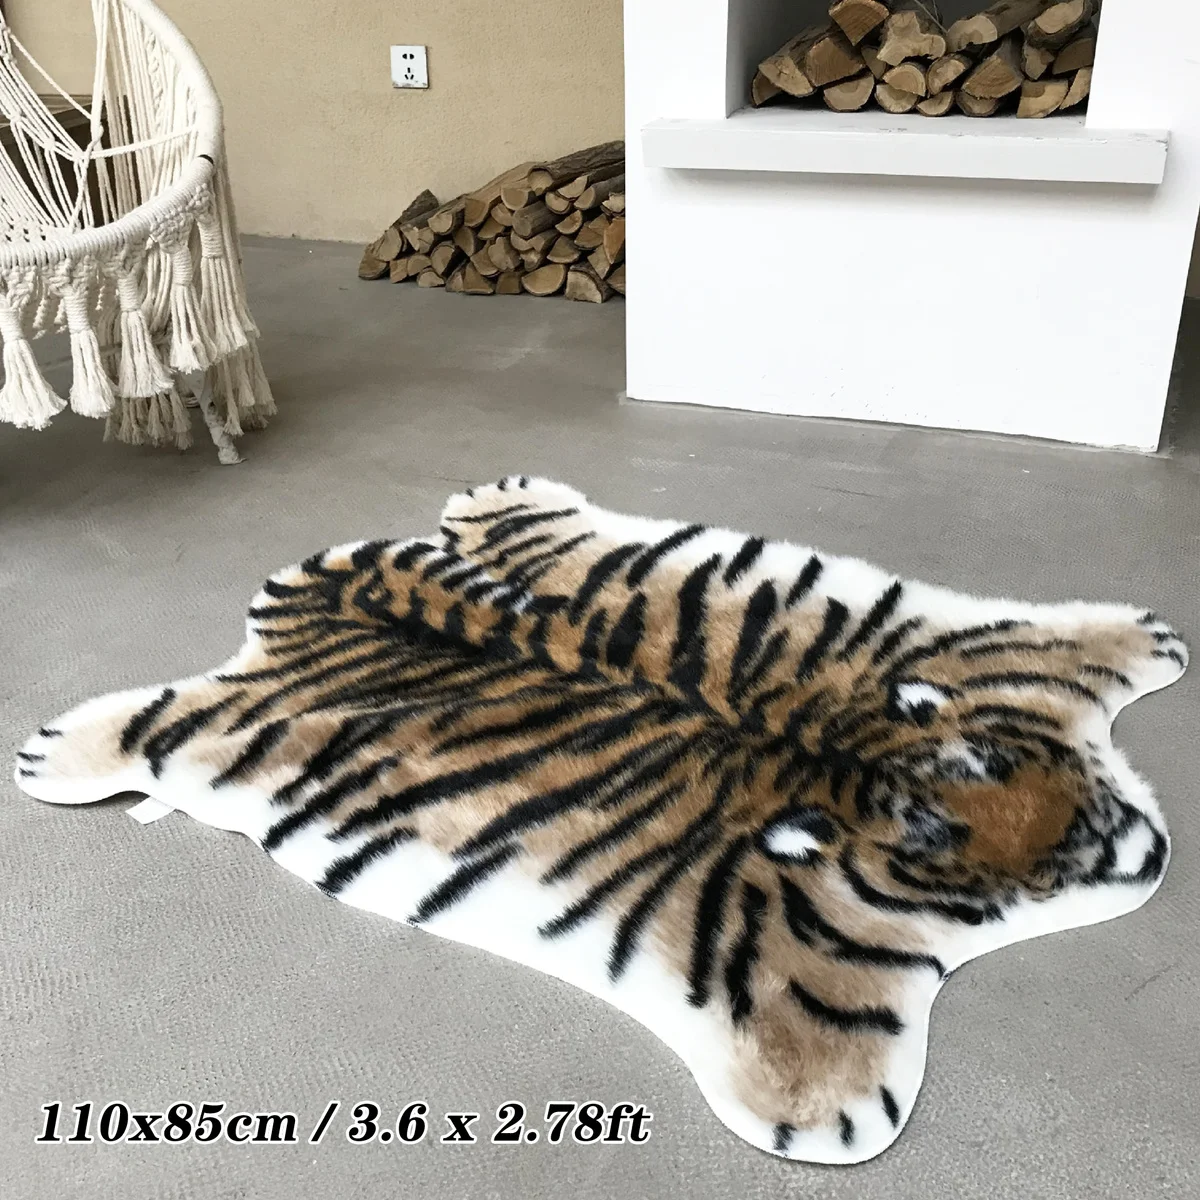 Soft Fluffy Tiger Faux Fur Carpet Imitation Tiger Hide Printed Animal Skins Area Rug Faux Fur Cute Rugs 110x85cm